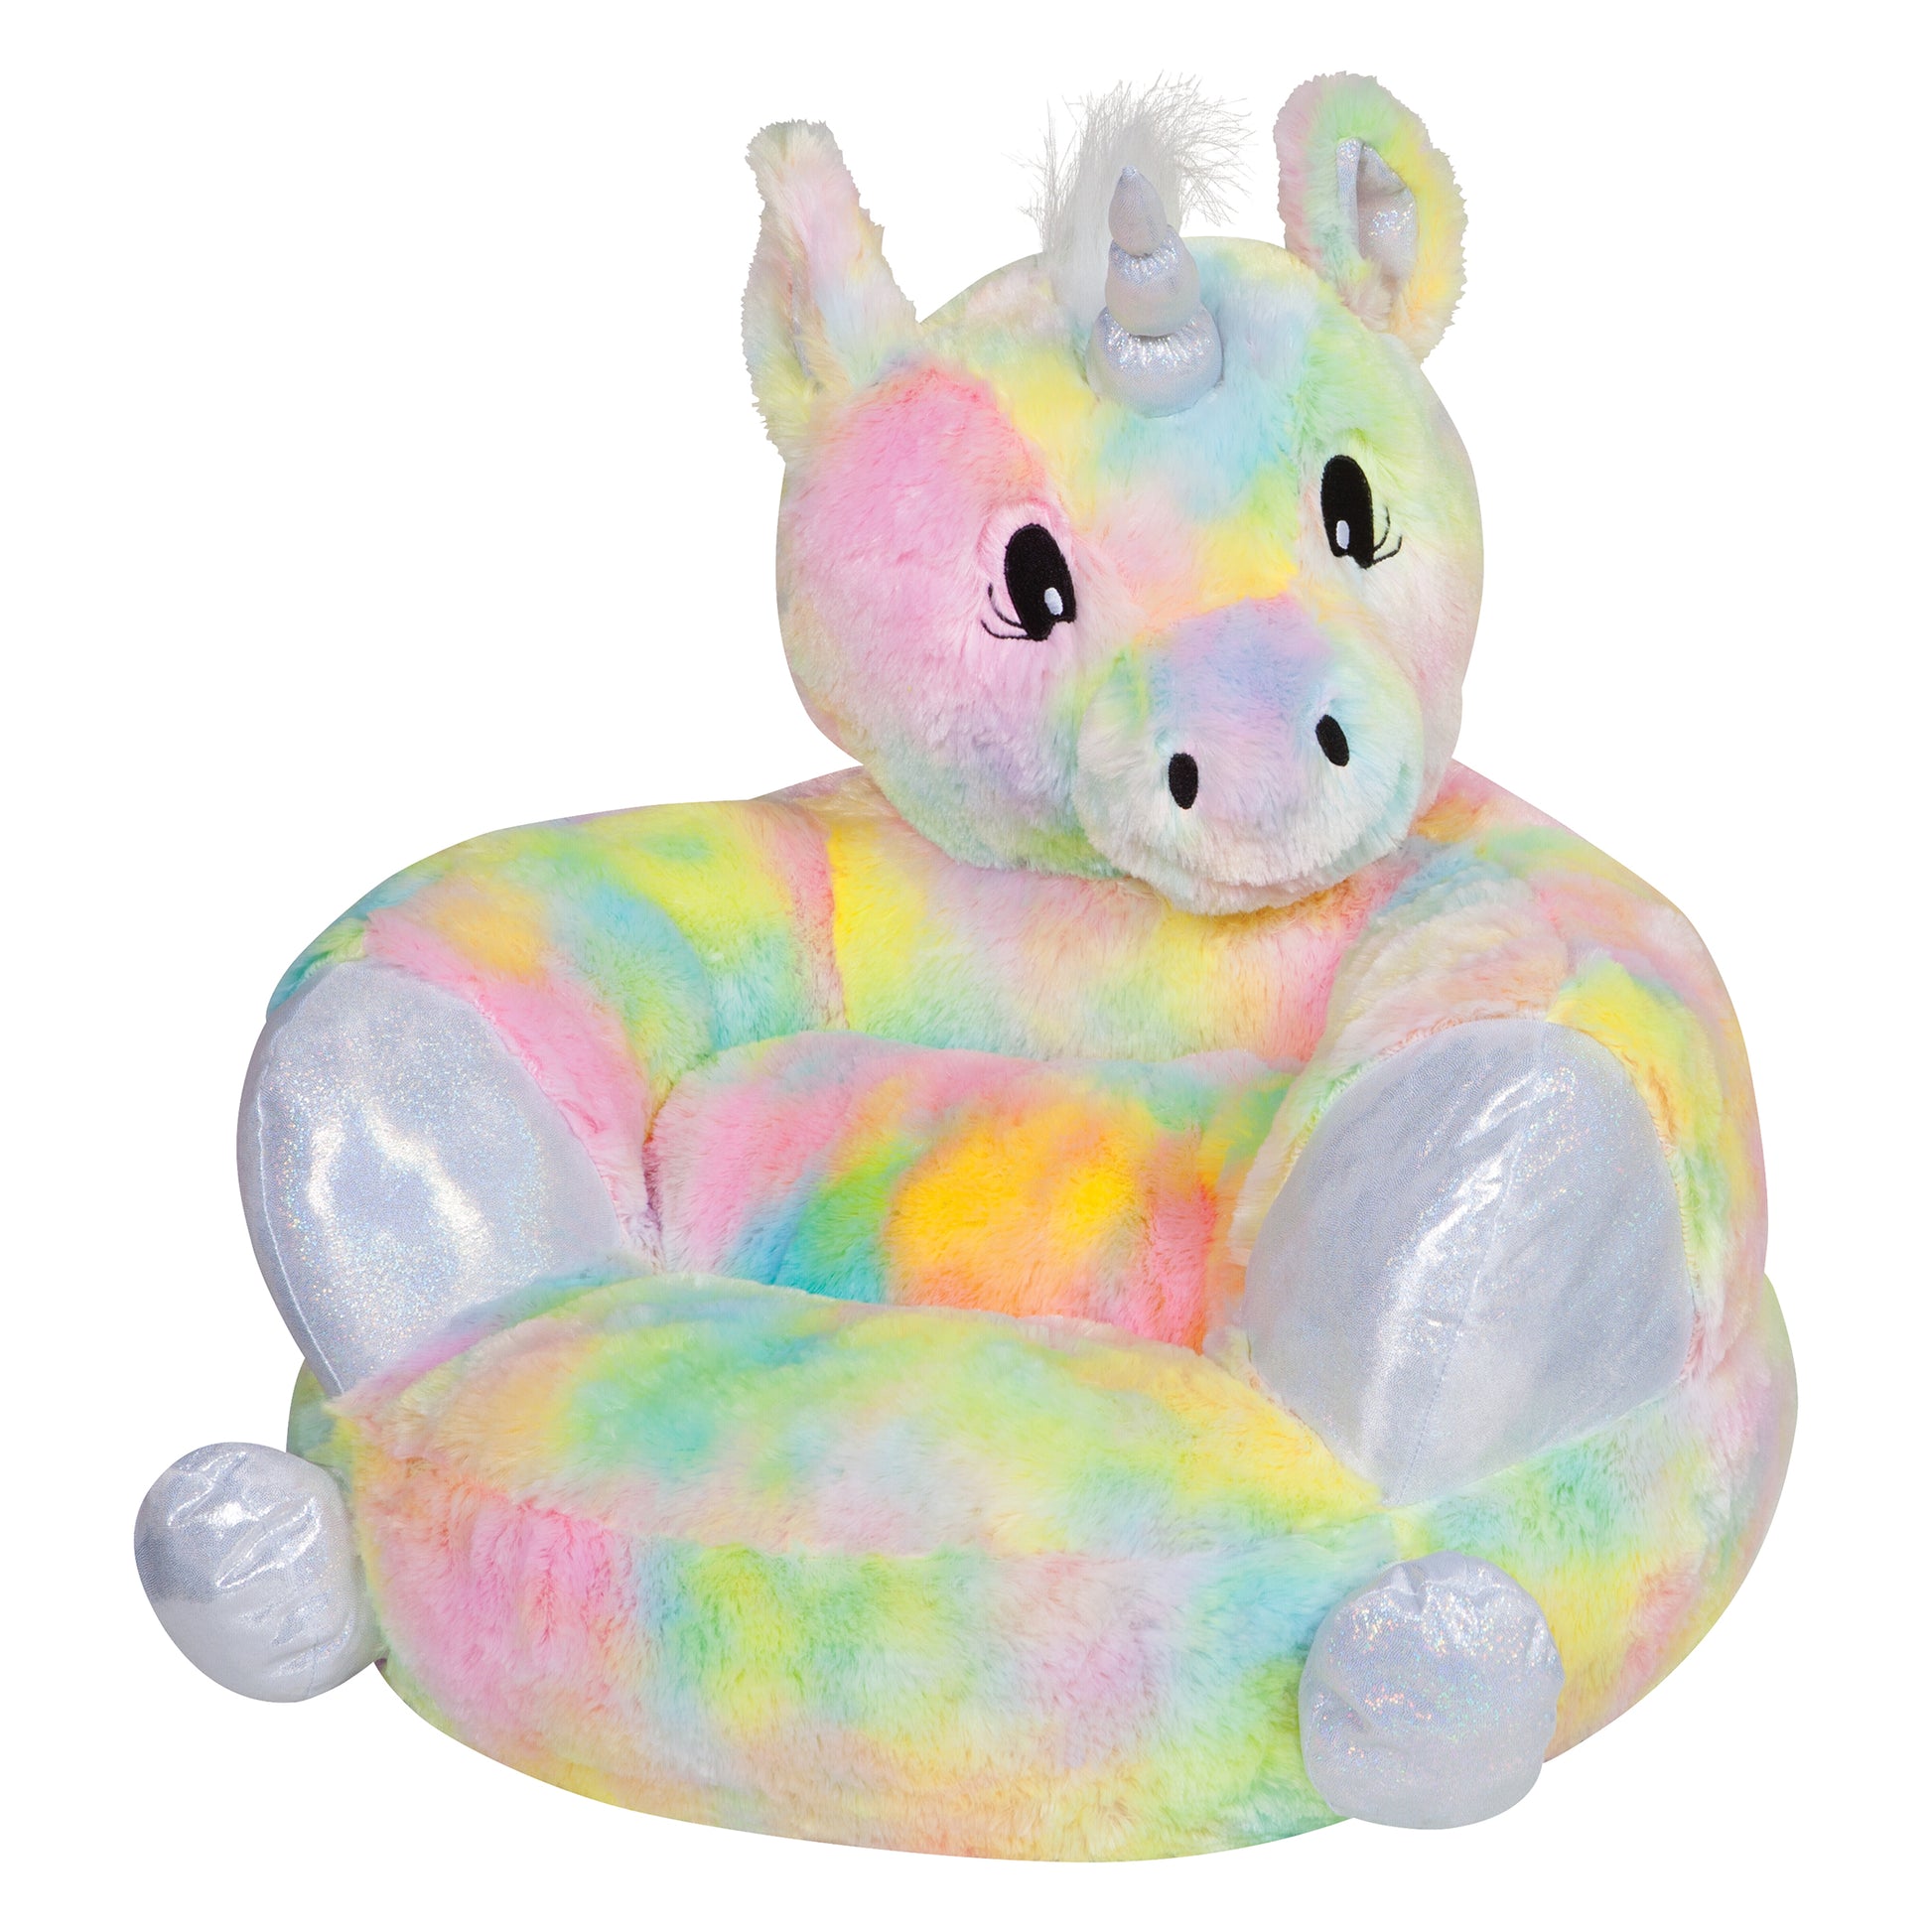 Children's Plush Rainbow Unicorn Character Chair103412$69.99Trend Lab